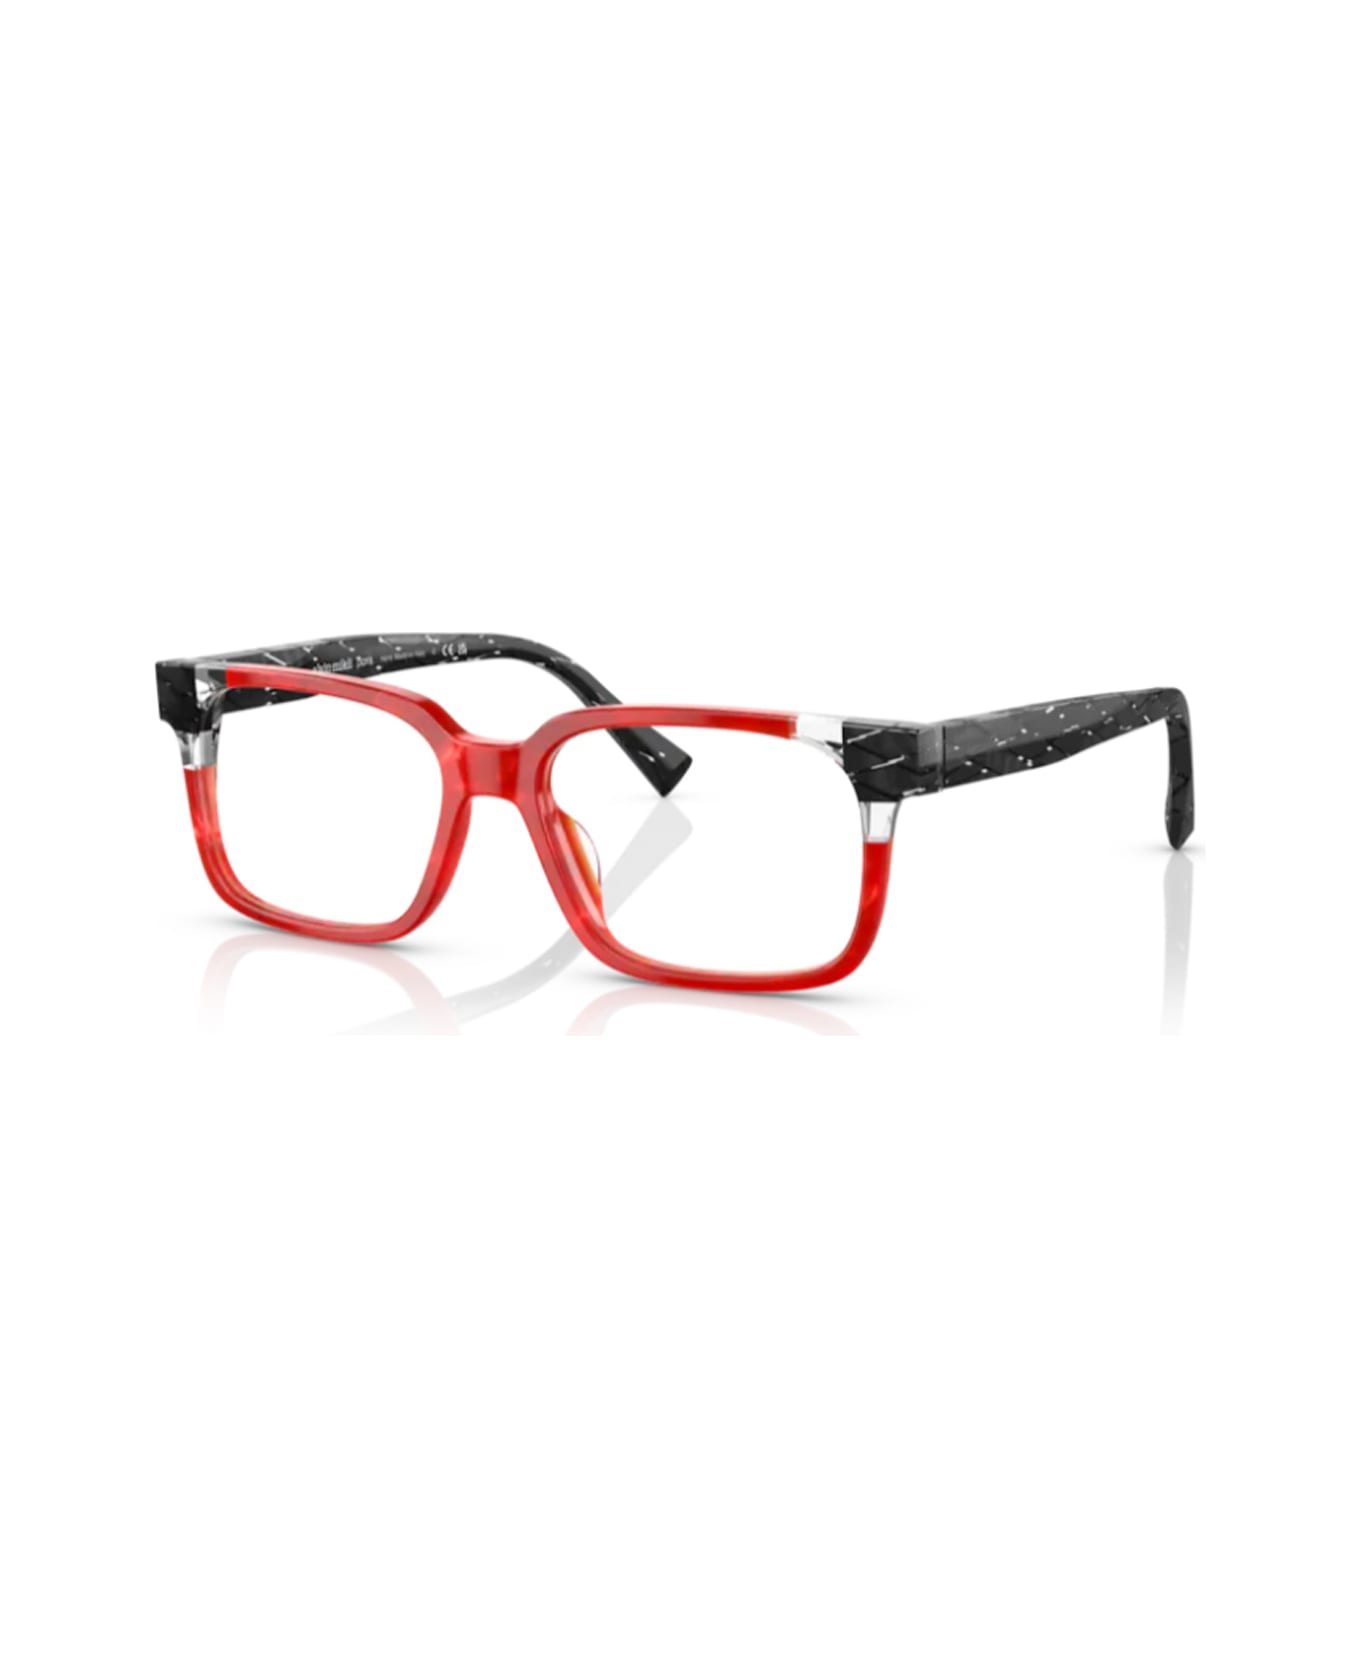 Alain Mikli A03112 009 Glasses - Rosso